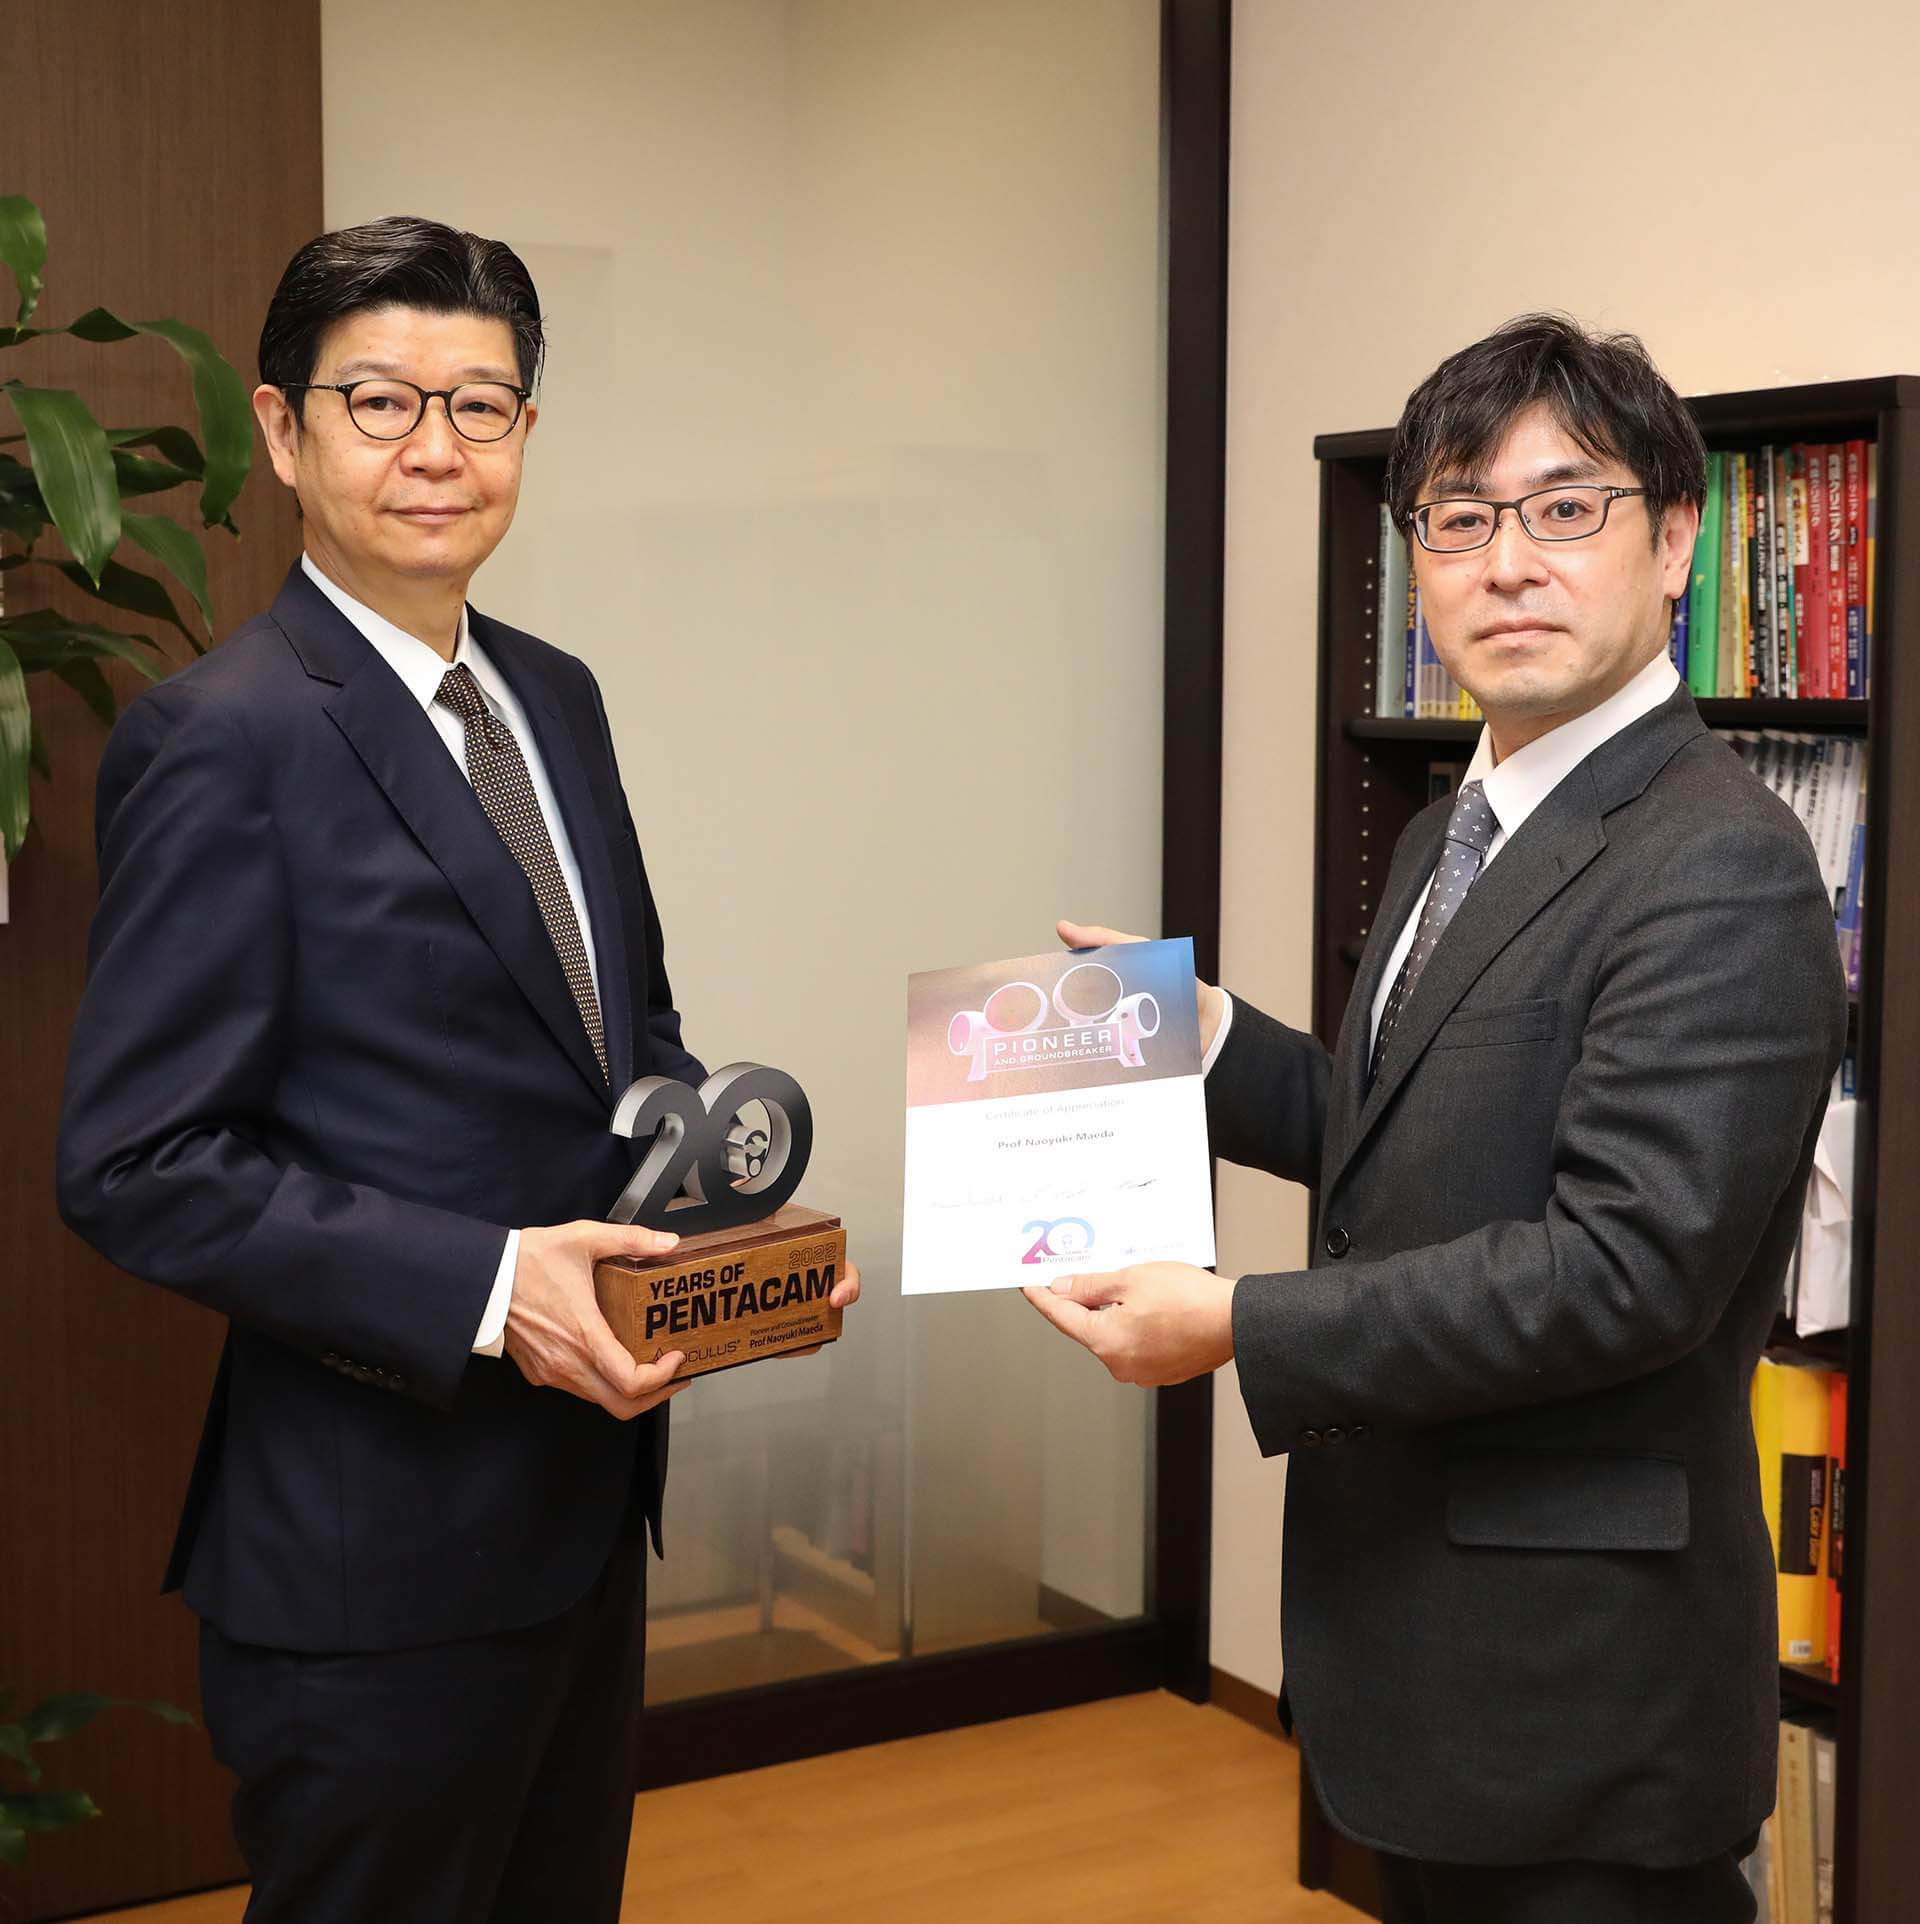 Prof Maeda Naoyuki receives the 20th Anniversary Pentacam® Trophy from Kenichi Tsuji